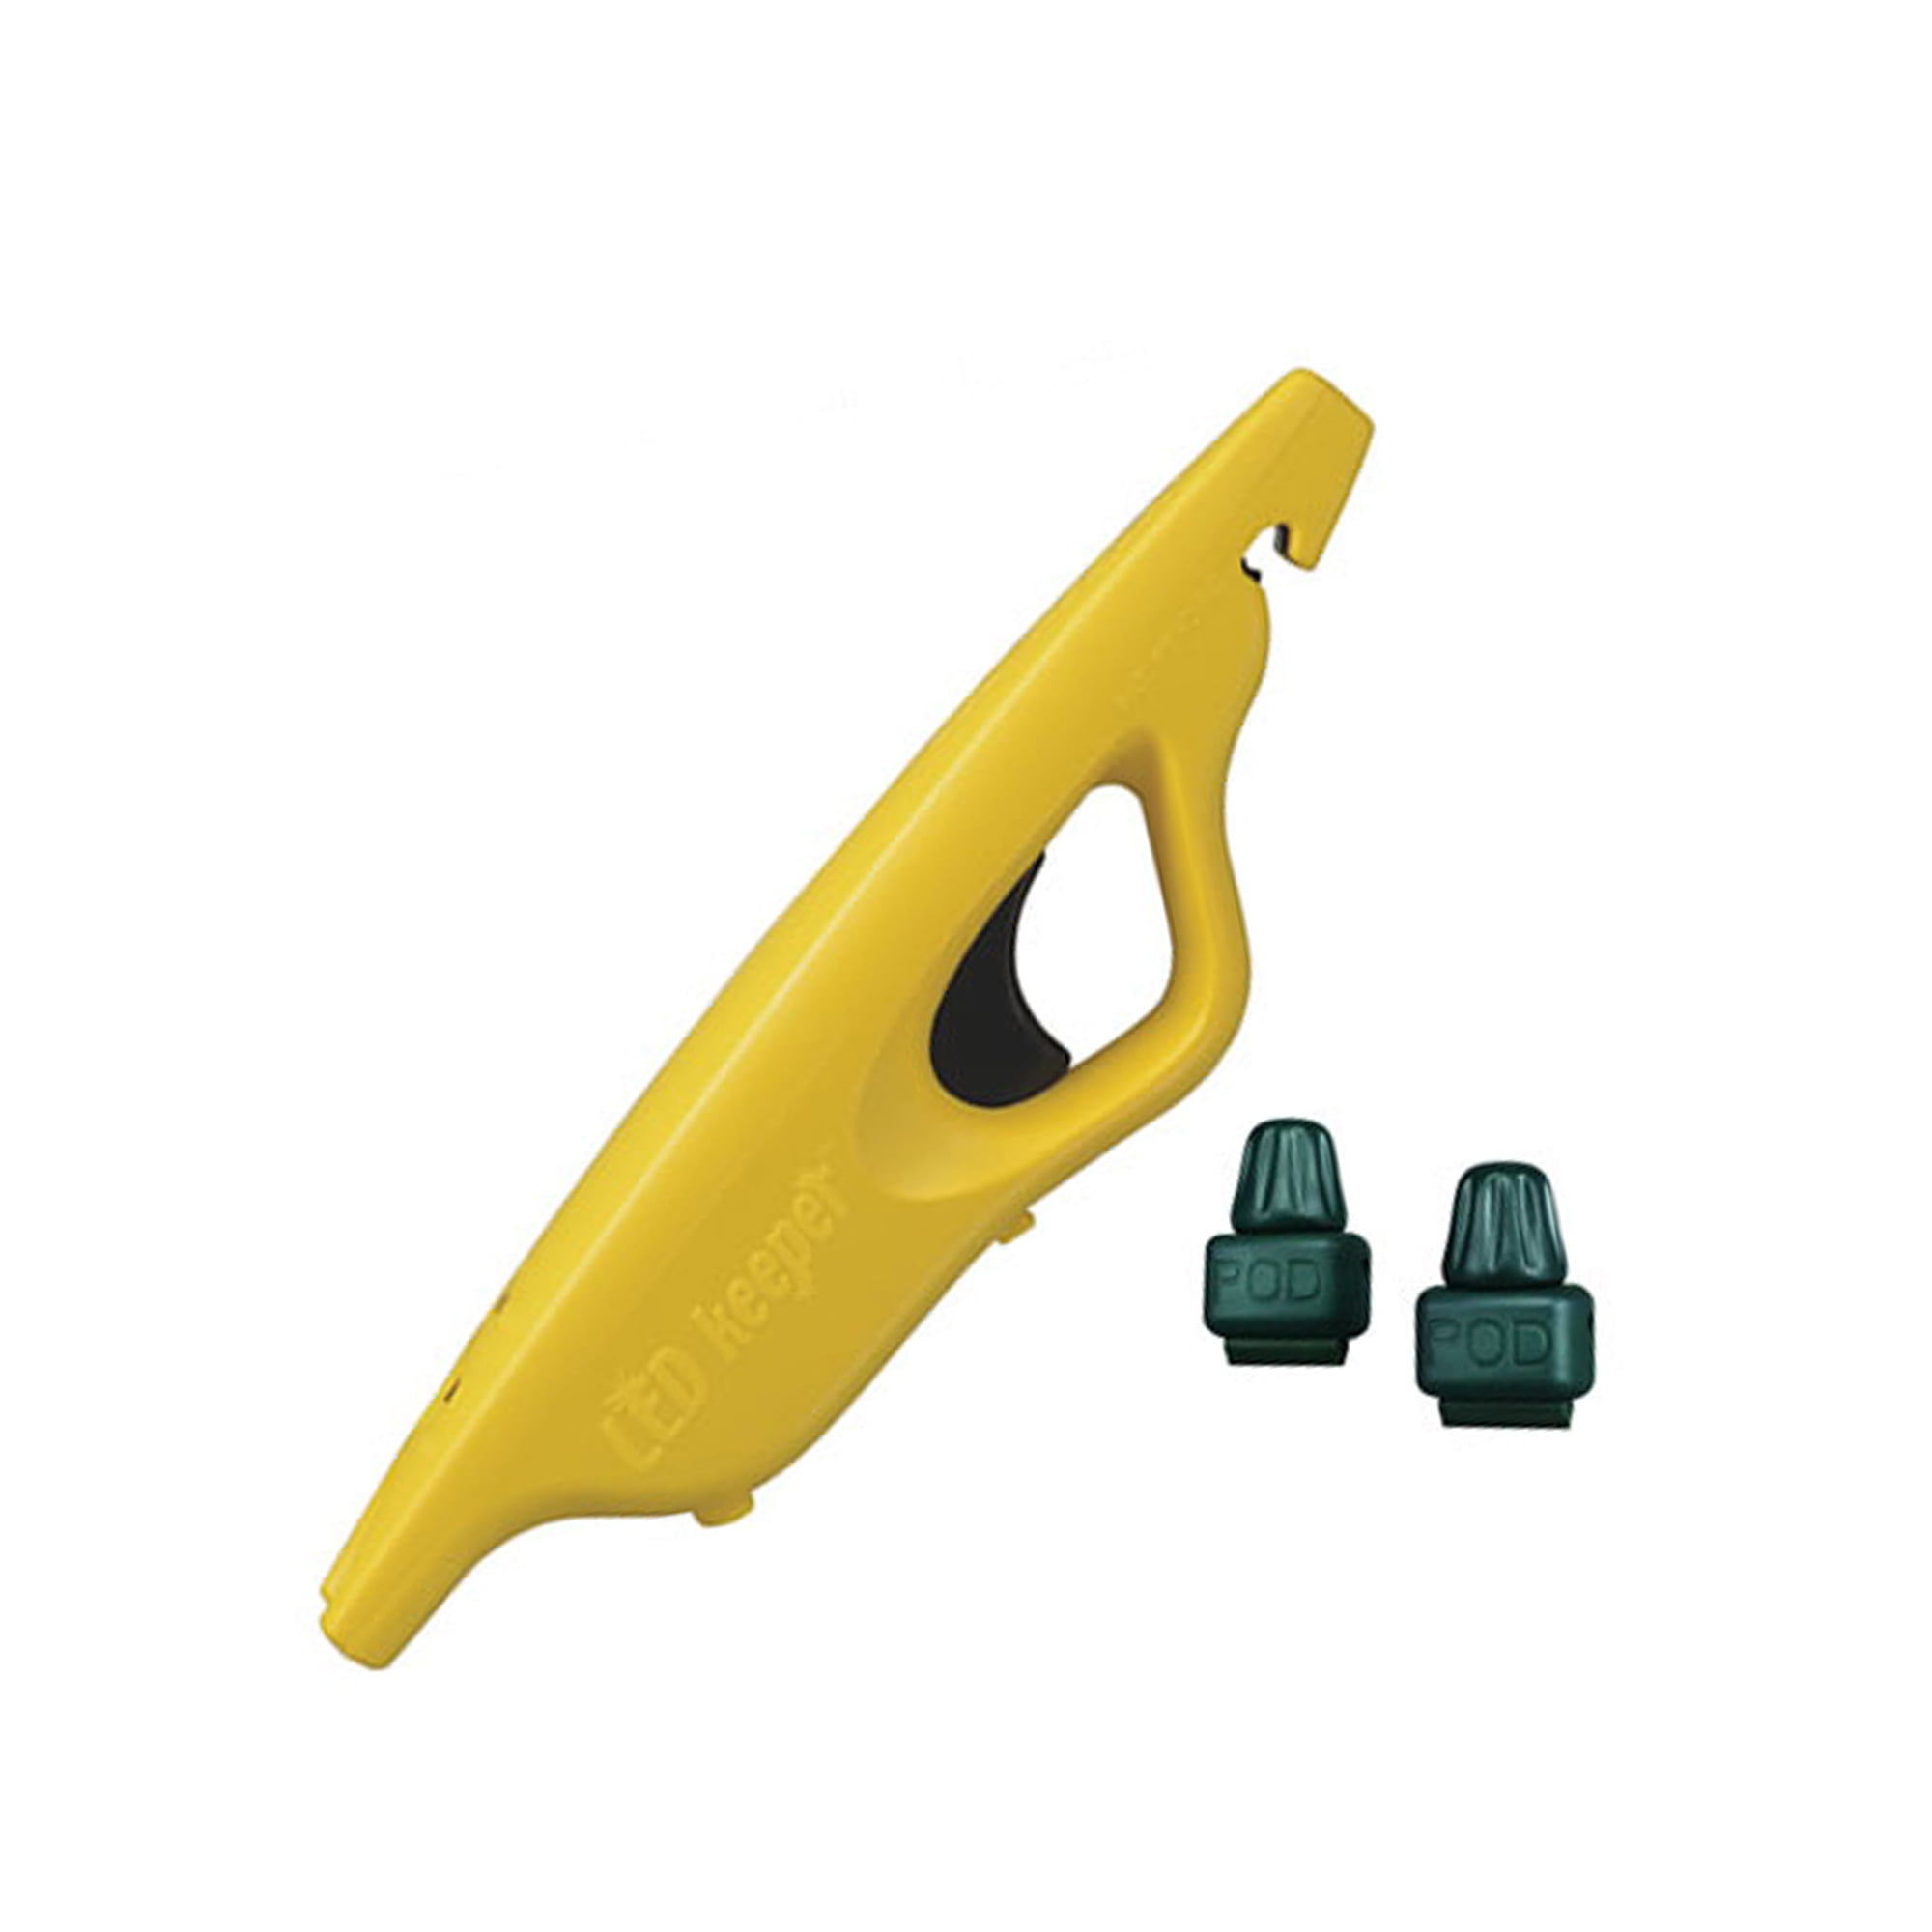 Ulta-Lit LightKeeper Pro Repair Tool for Incandescent Light Sets for sale online 